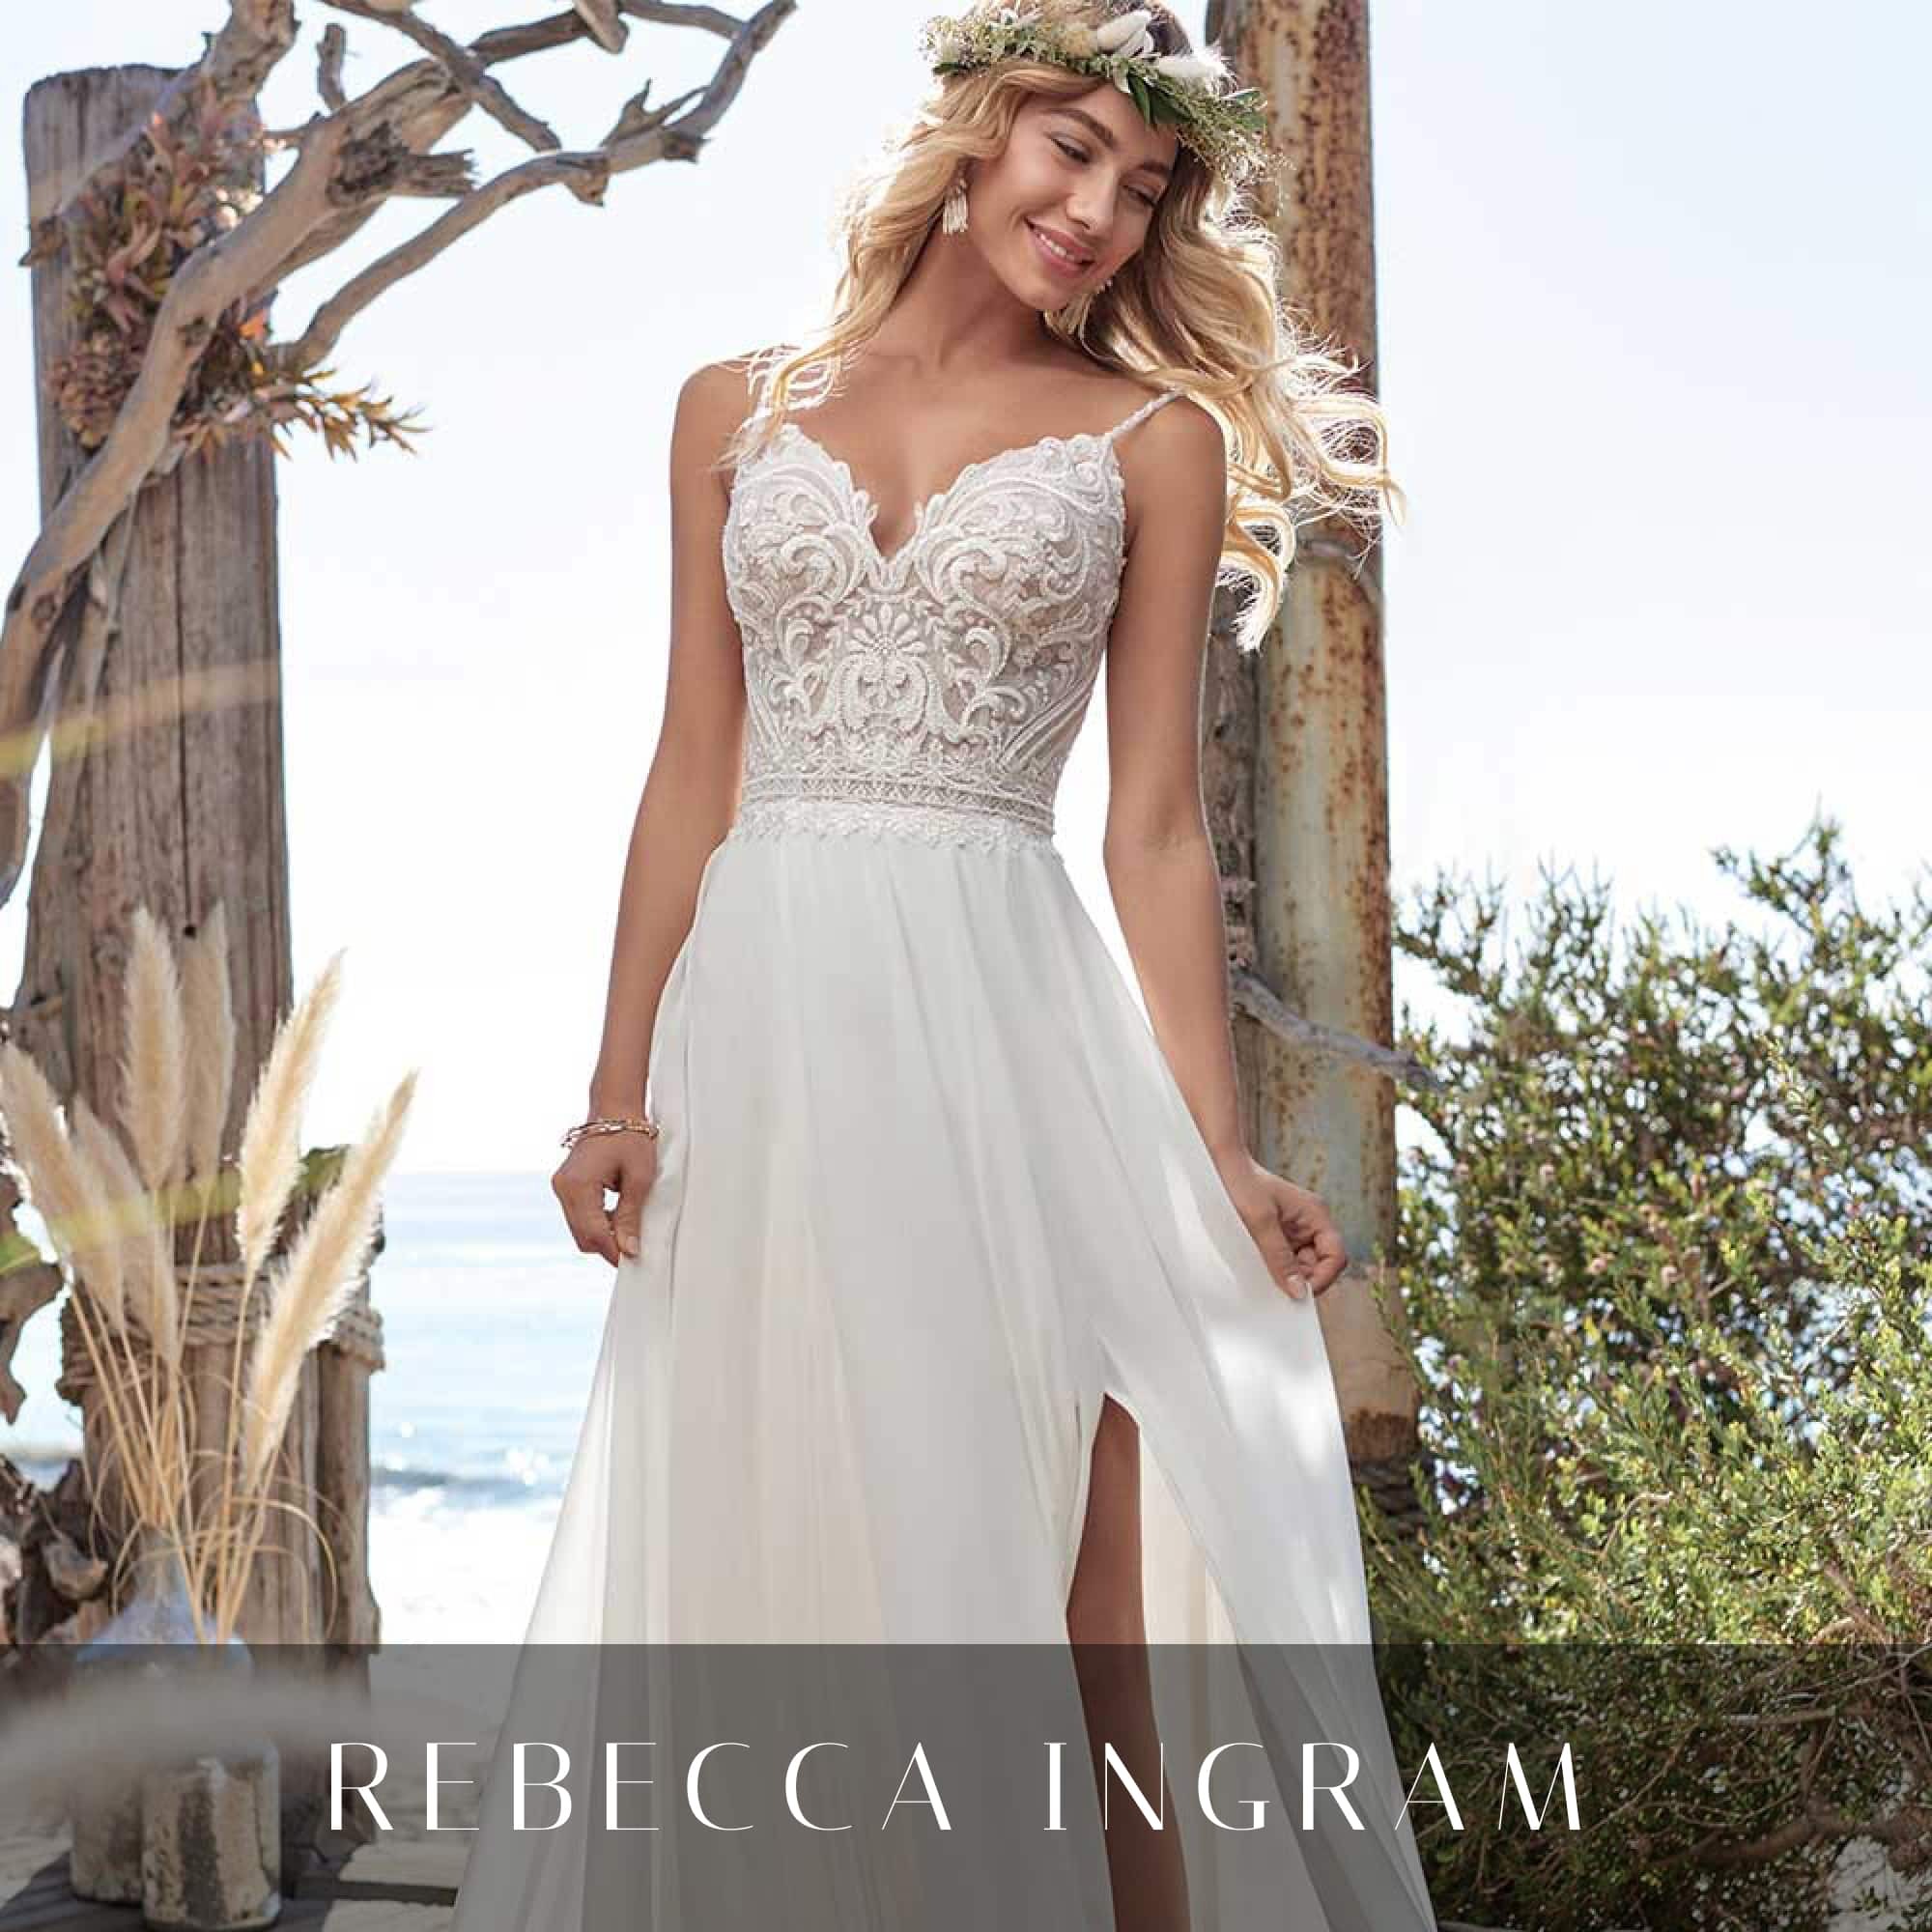 REBECCA INGRAM WEDDING DRESSES